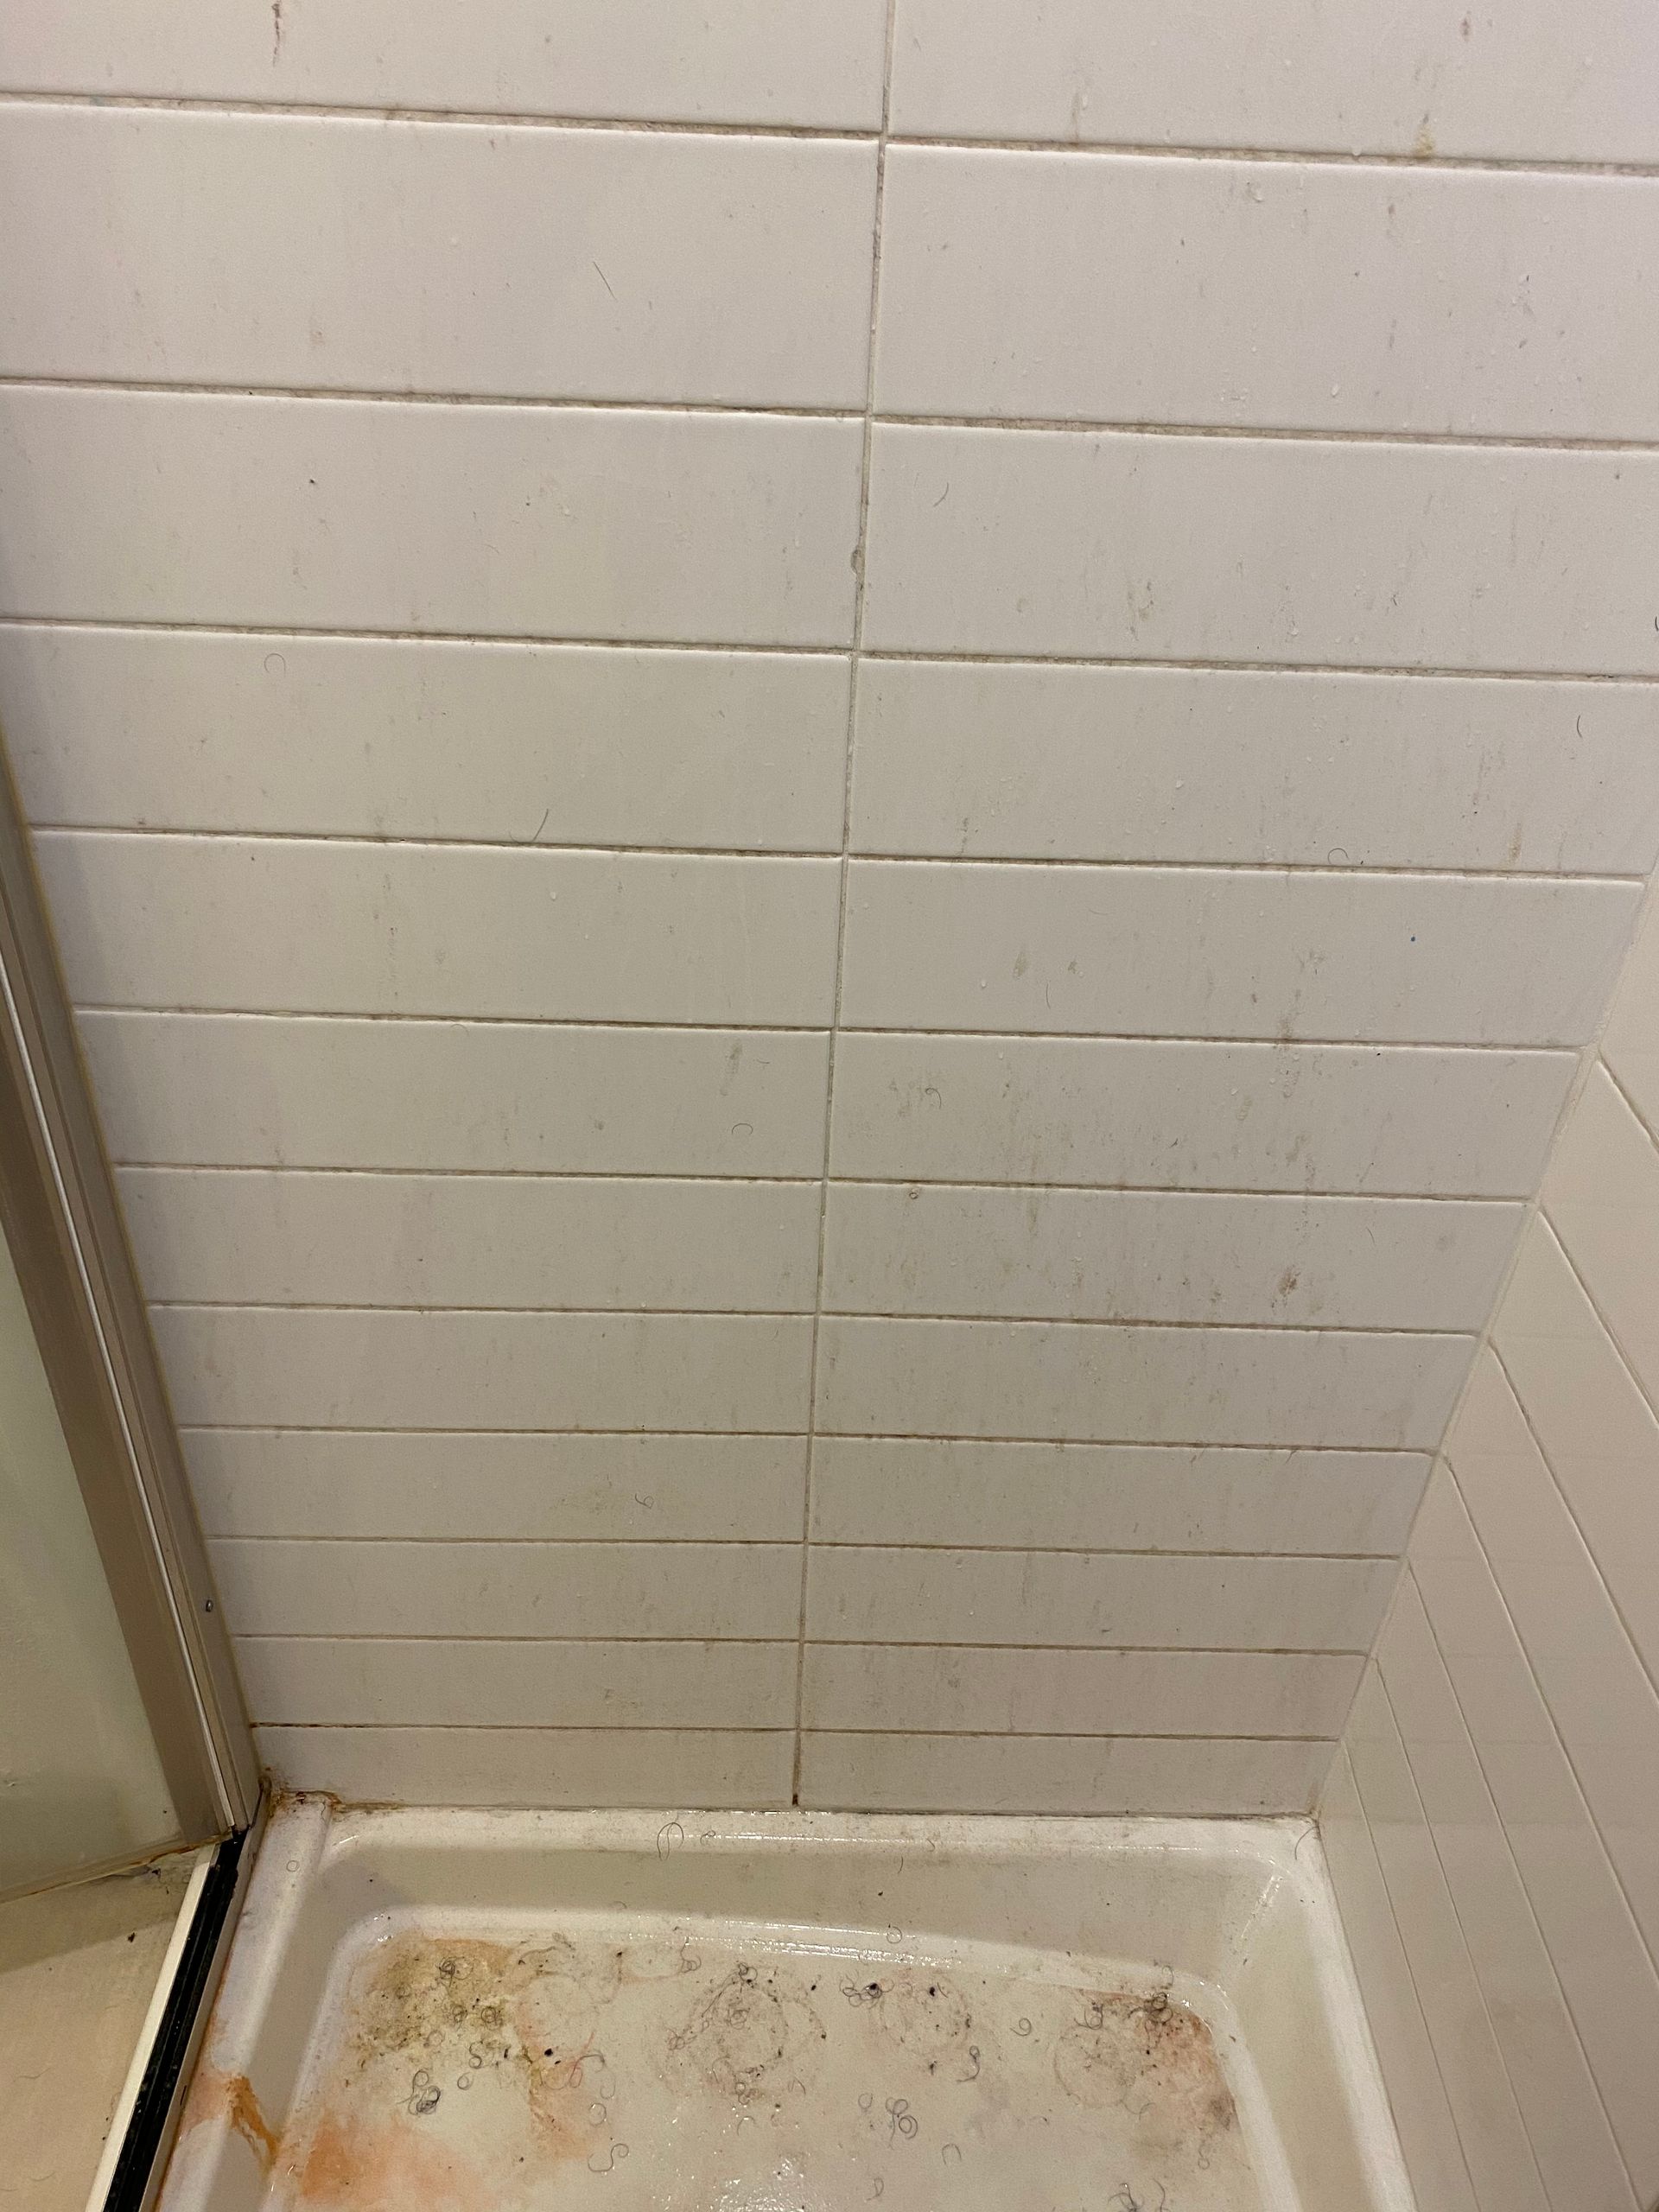 Dirty tile| Lutz, FL | Our Clean Home